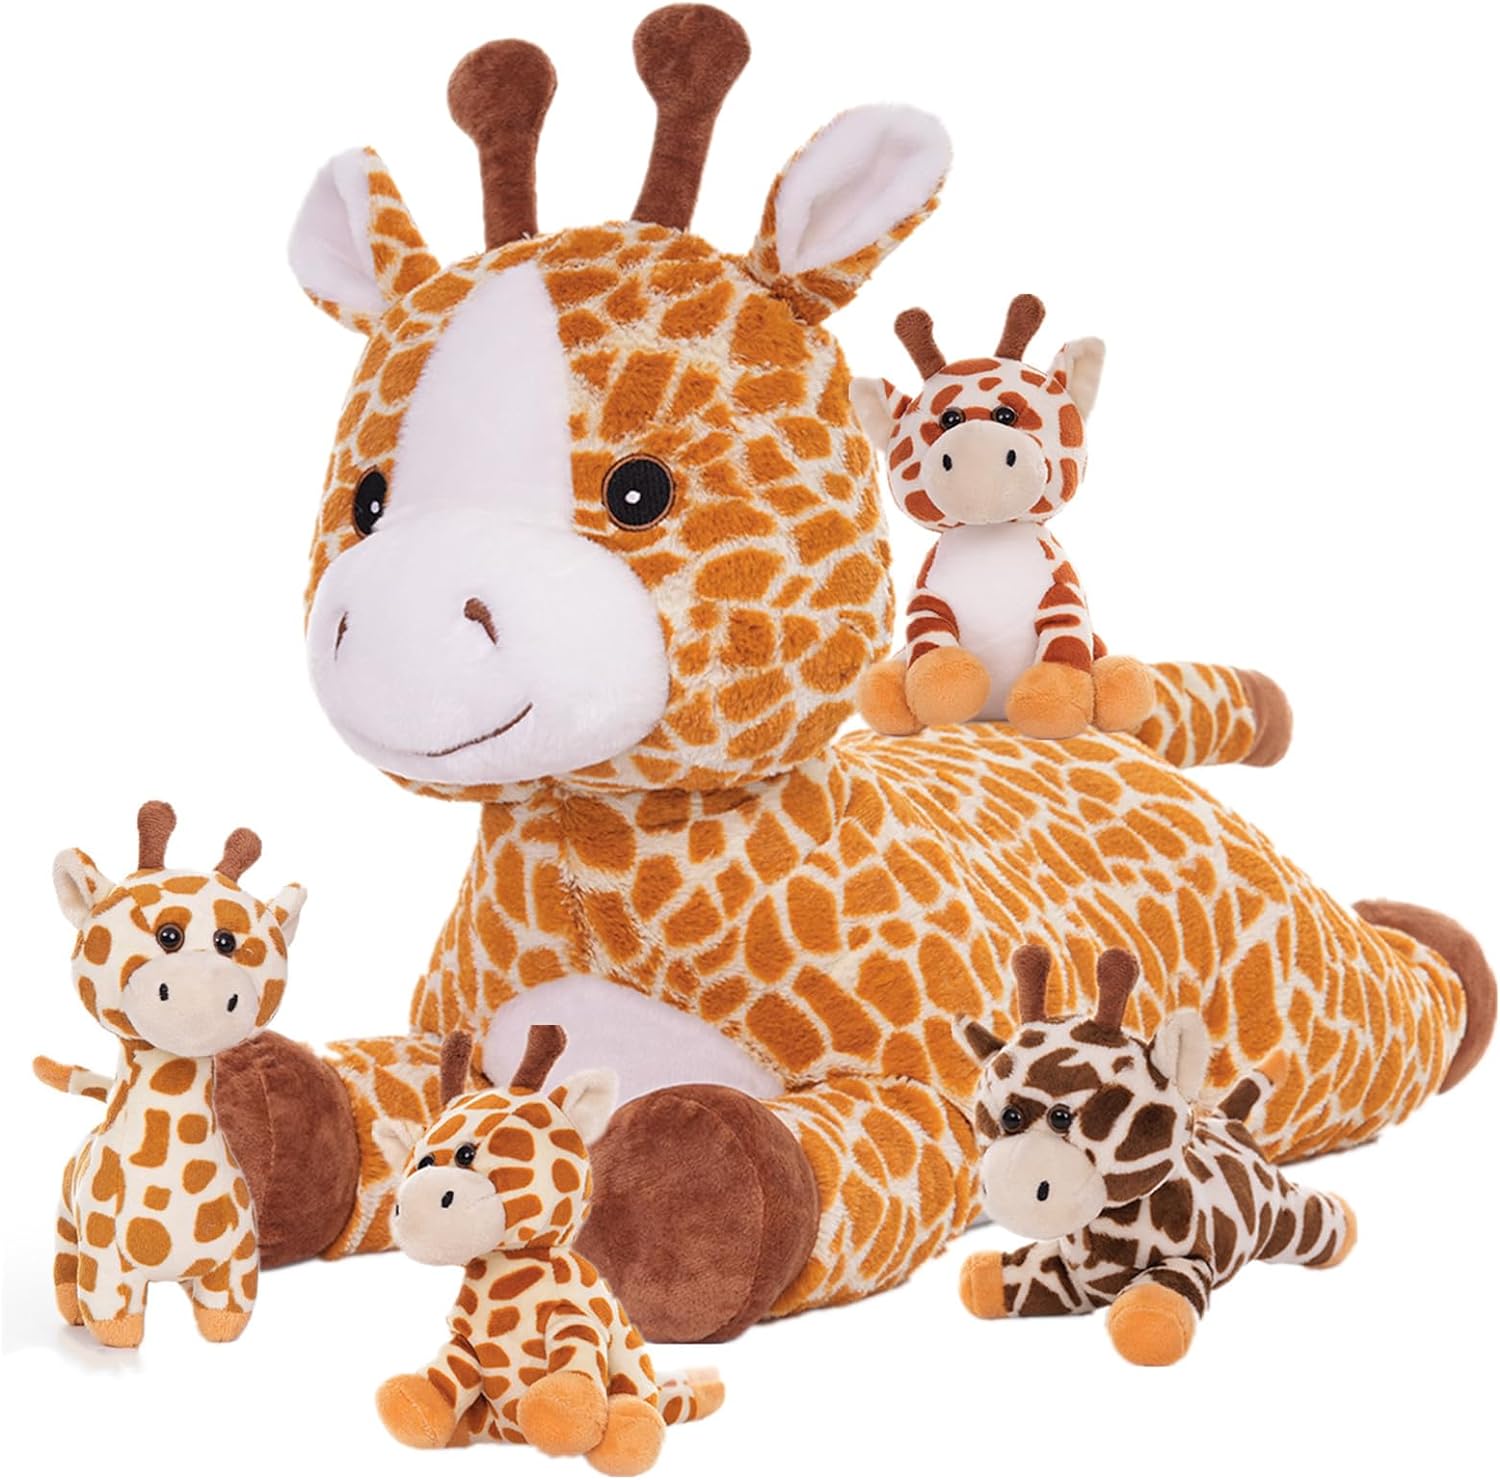 Giraffe Plush Toys Jungle Stuffed Animals, 22 Inches